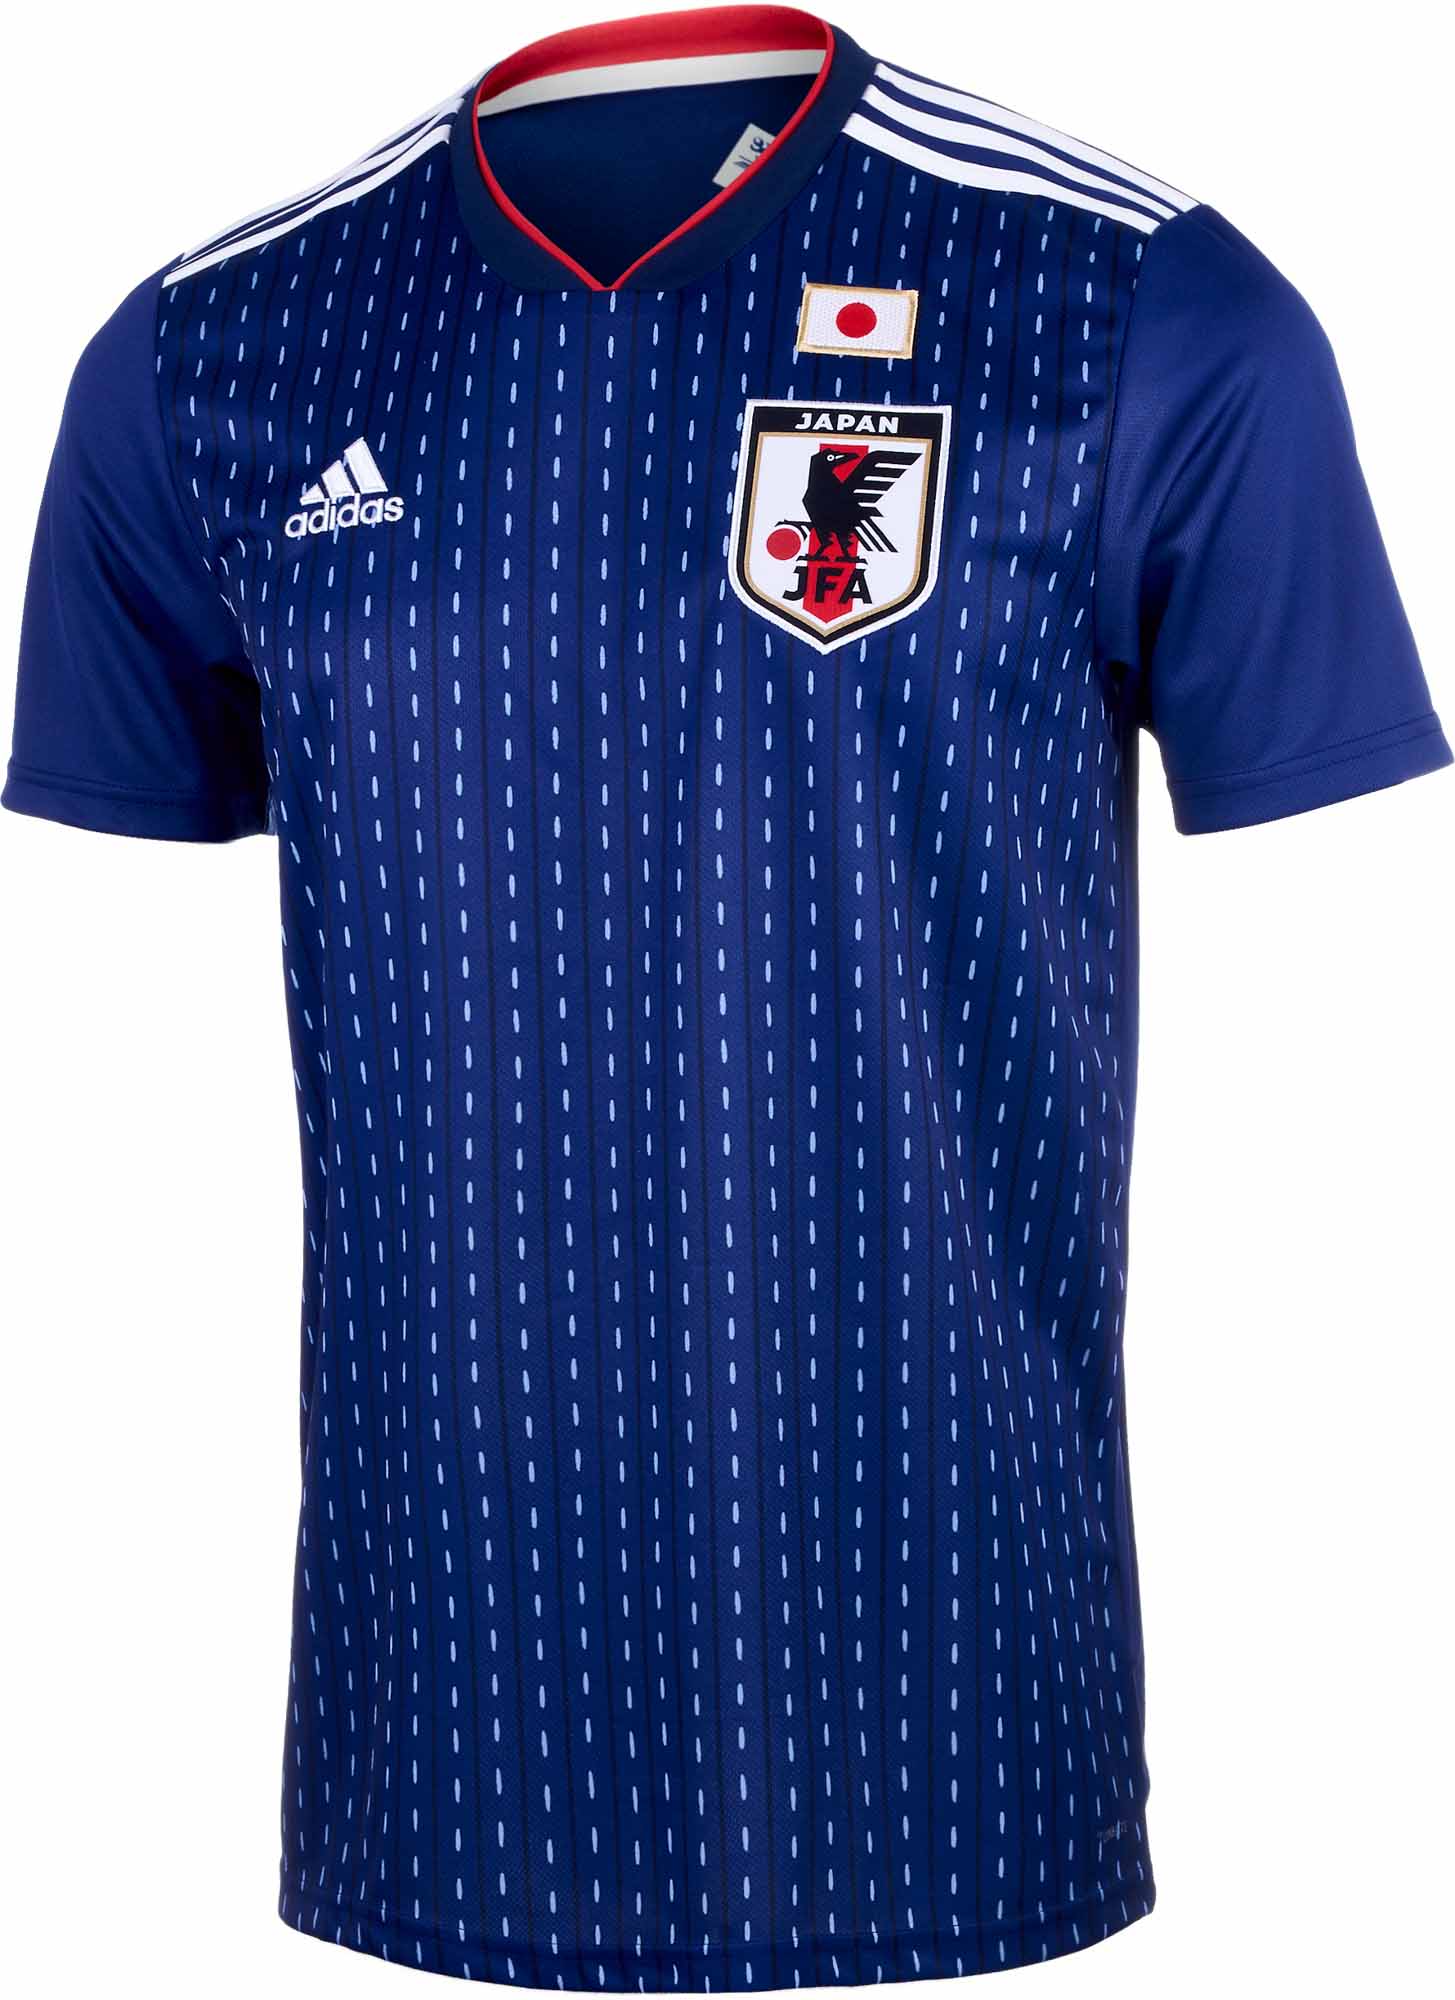 soccer jersey japan